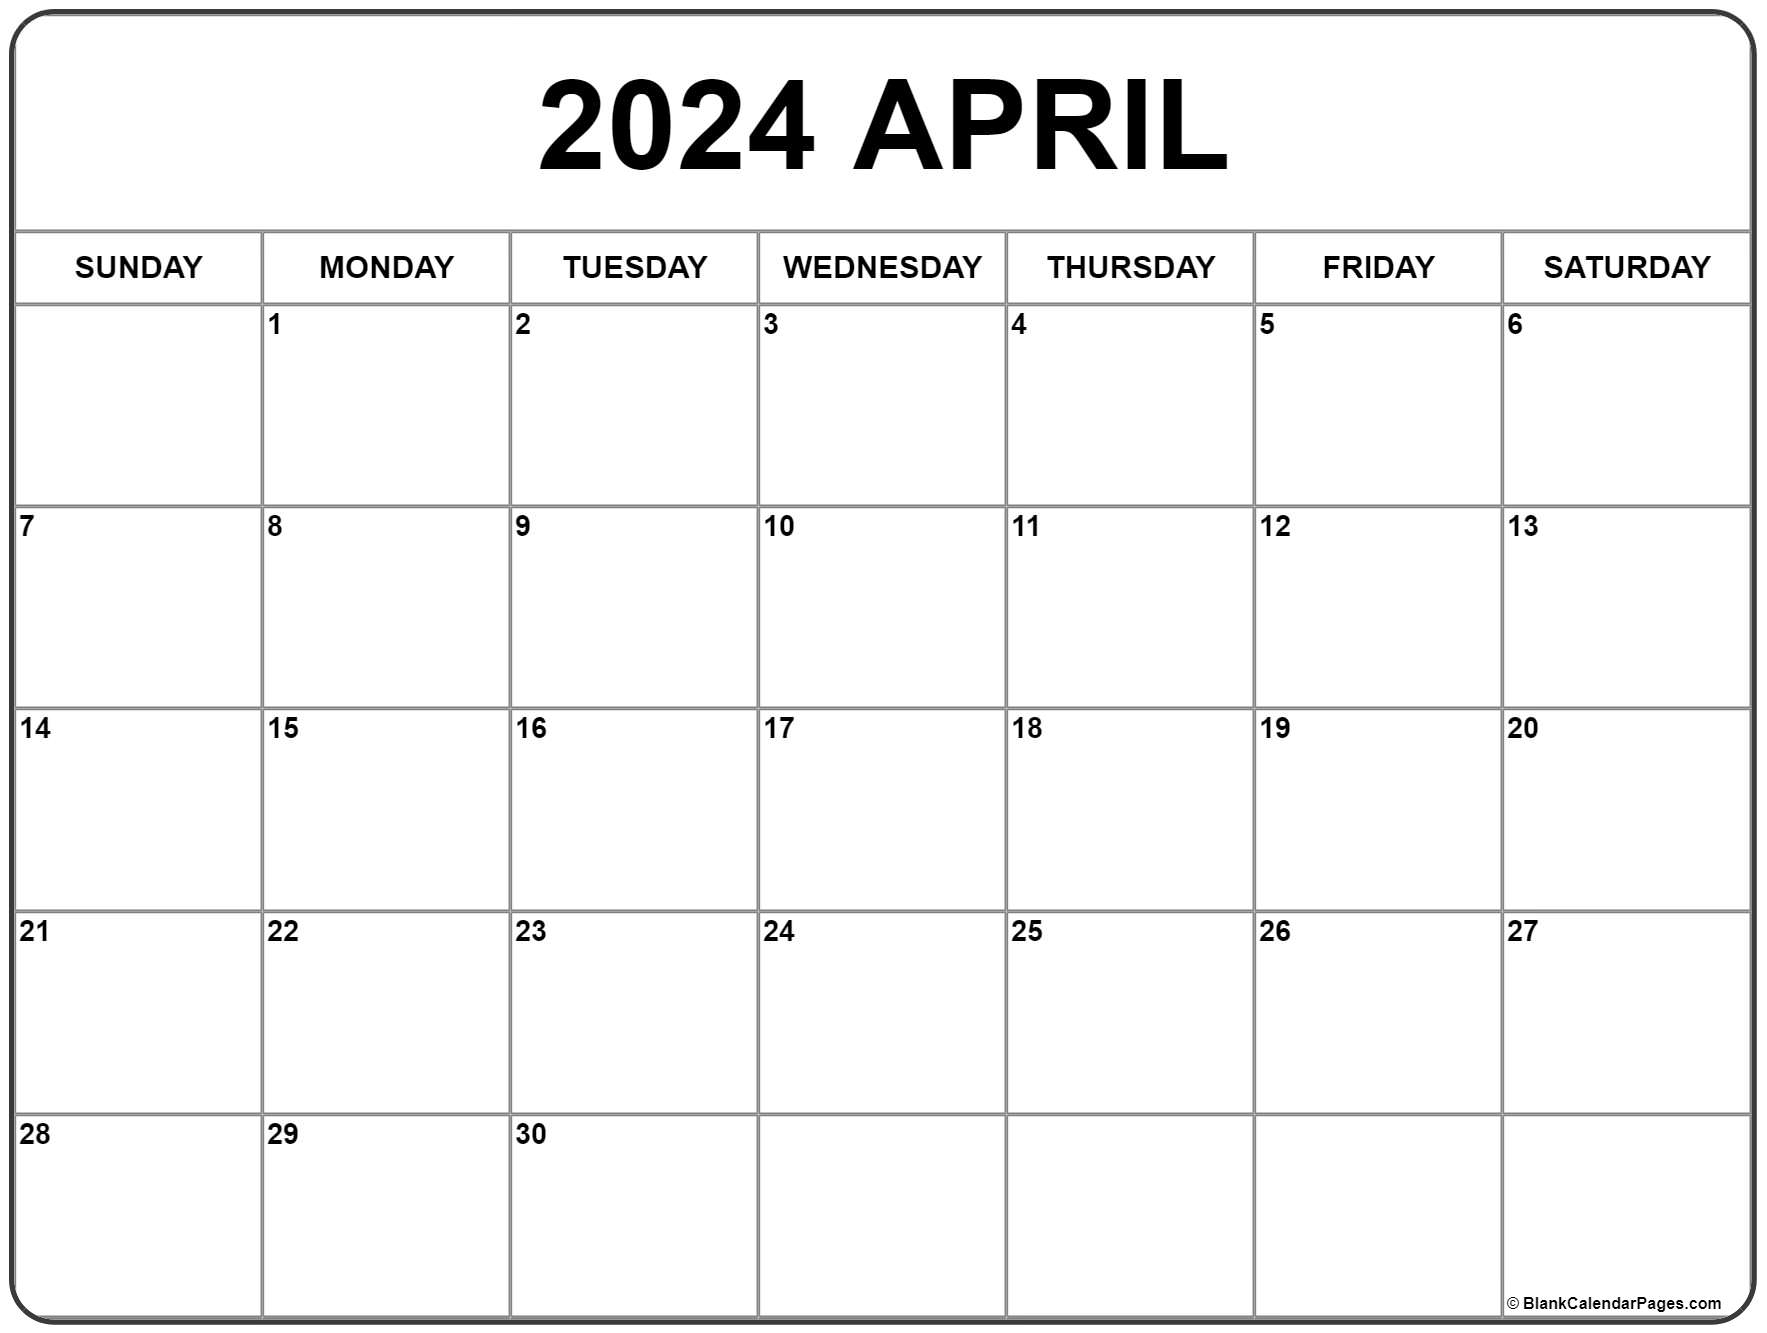 April 2024 Calendar | Free Printable Calendar throughout April 2024 Editable Calendar